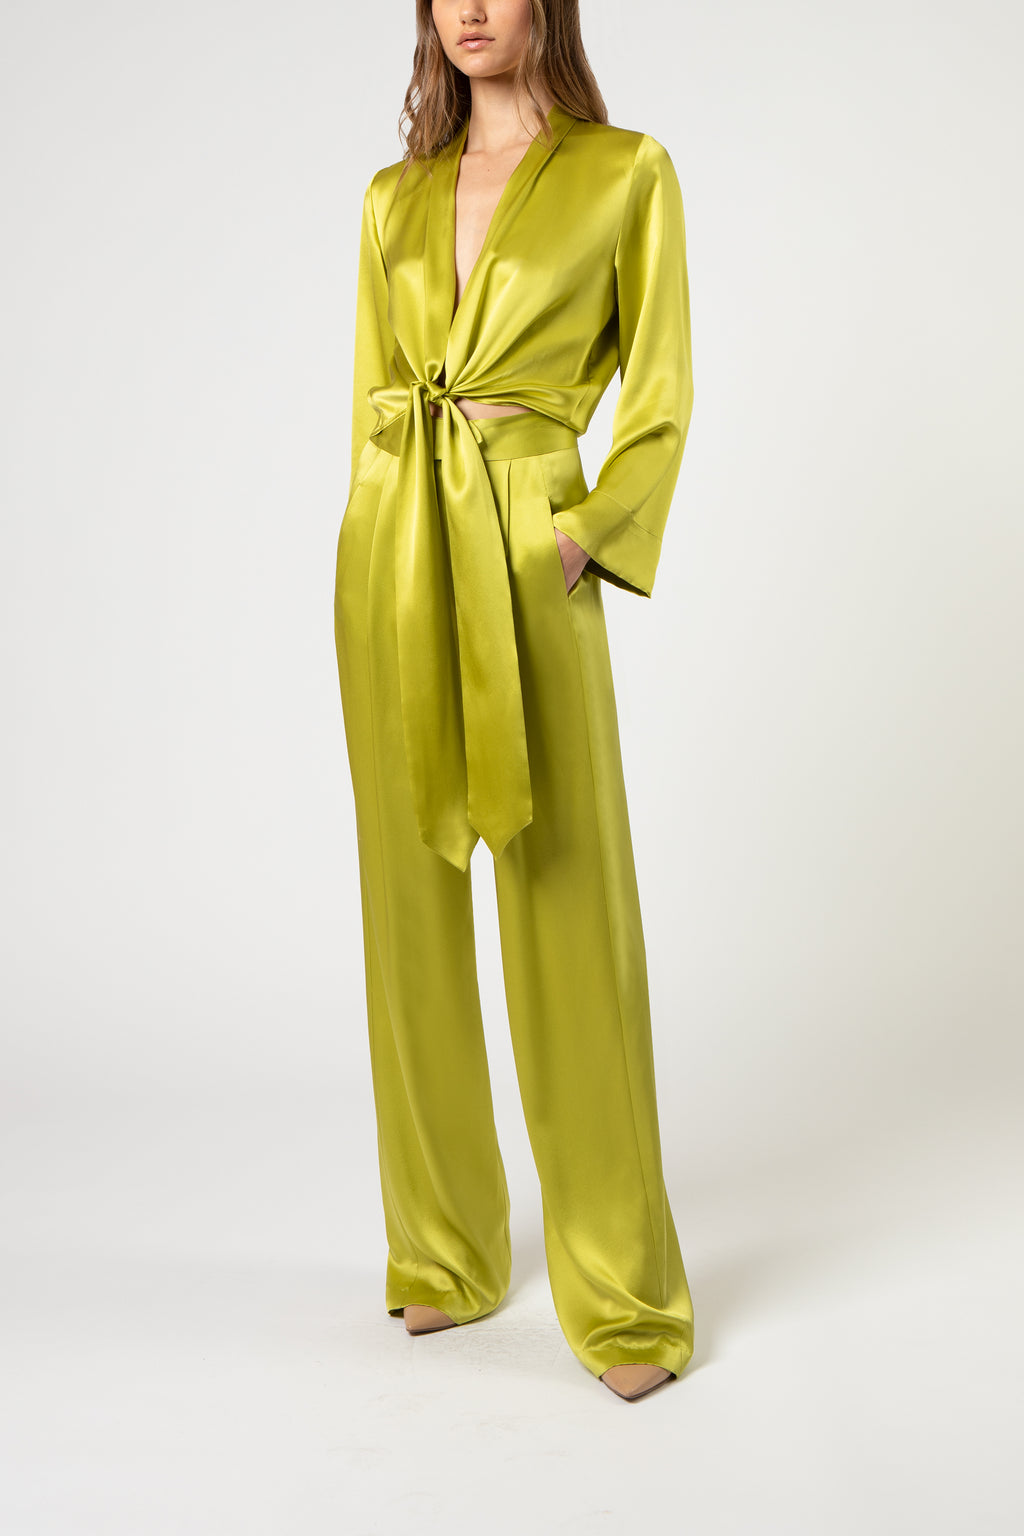 L/s kimono blouse with ties - chartreuse – Michelle Mason